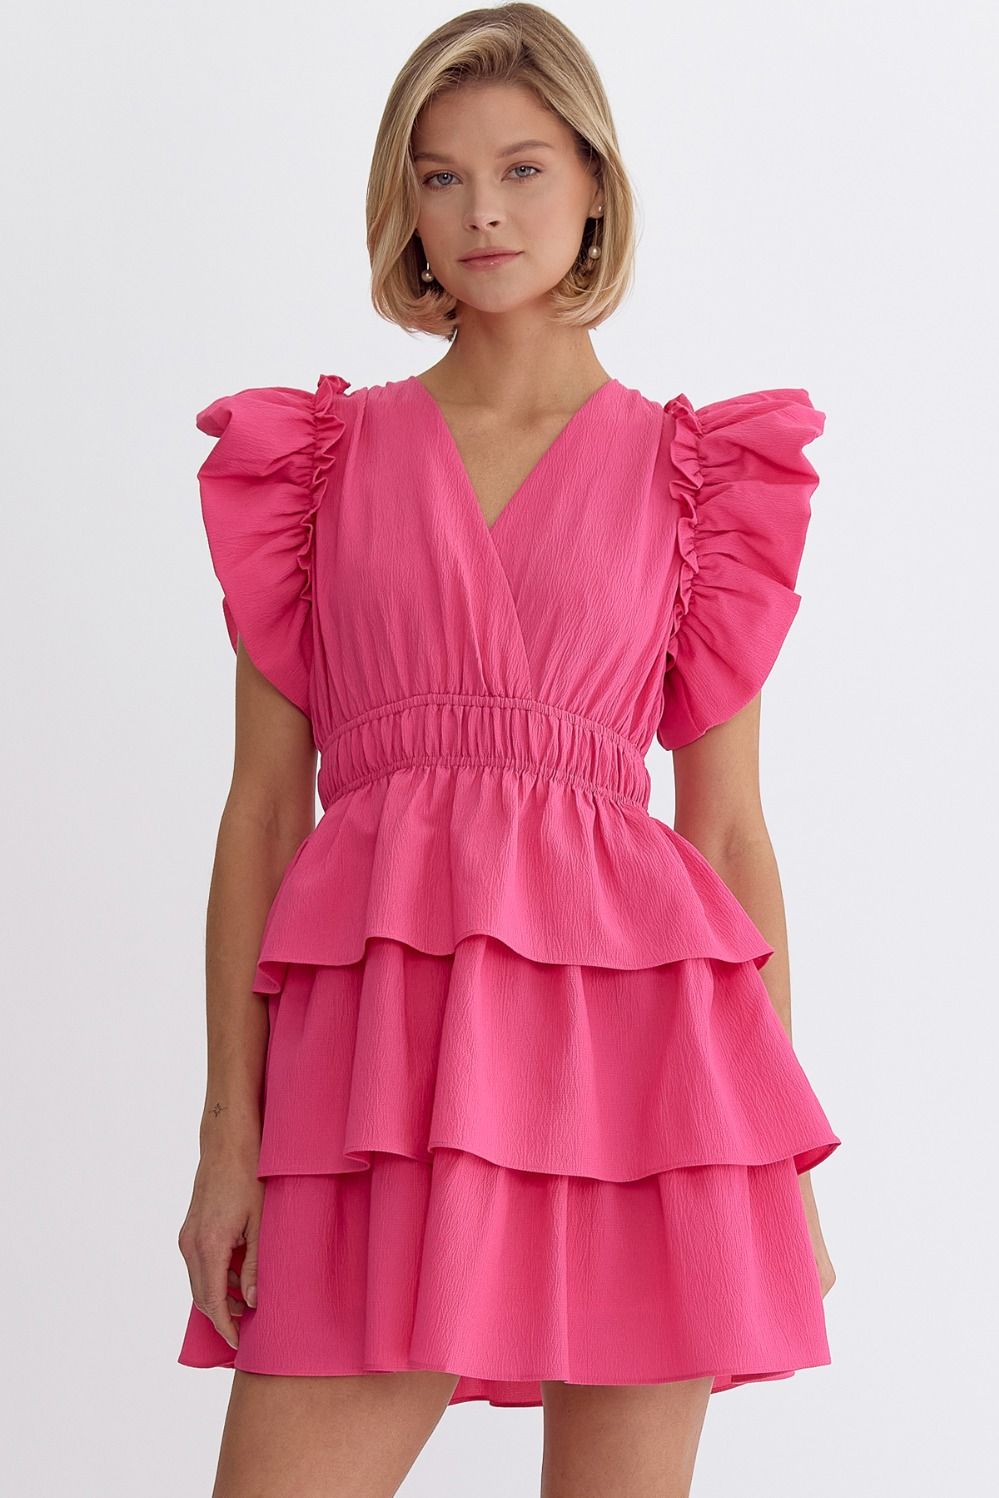 ENTRO INC Women's Dresses PINK / S Solid V-Neck Ruffle Sleeve Mini Dress || David's Clothing D20903NEW